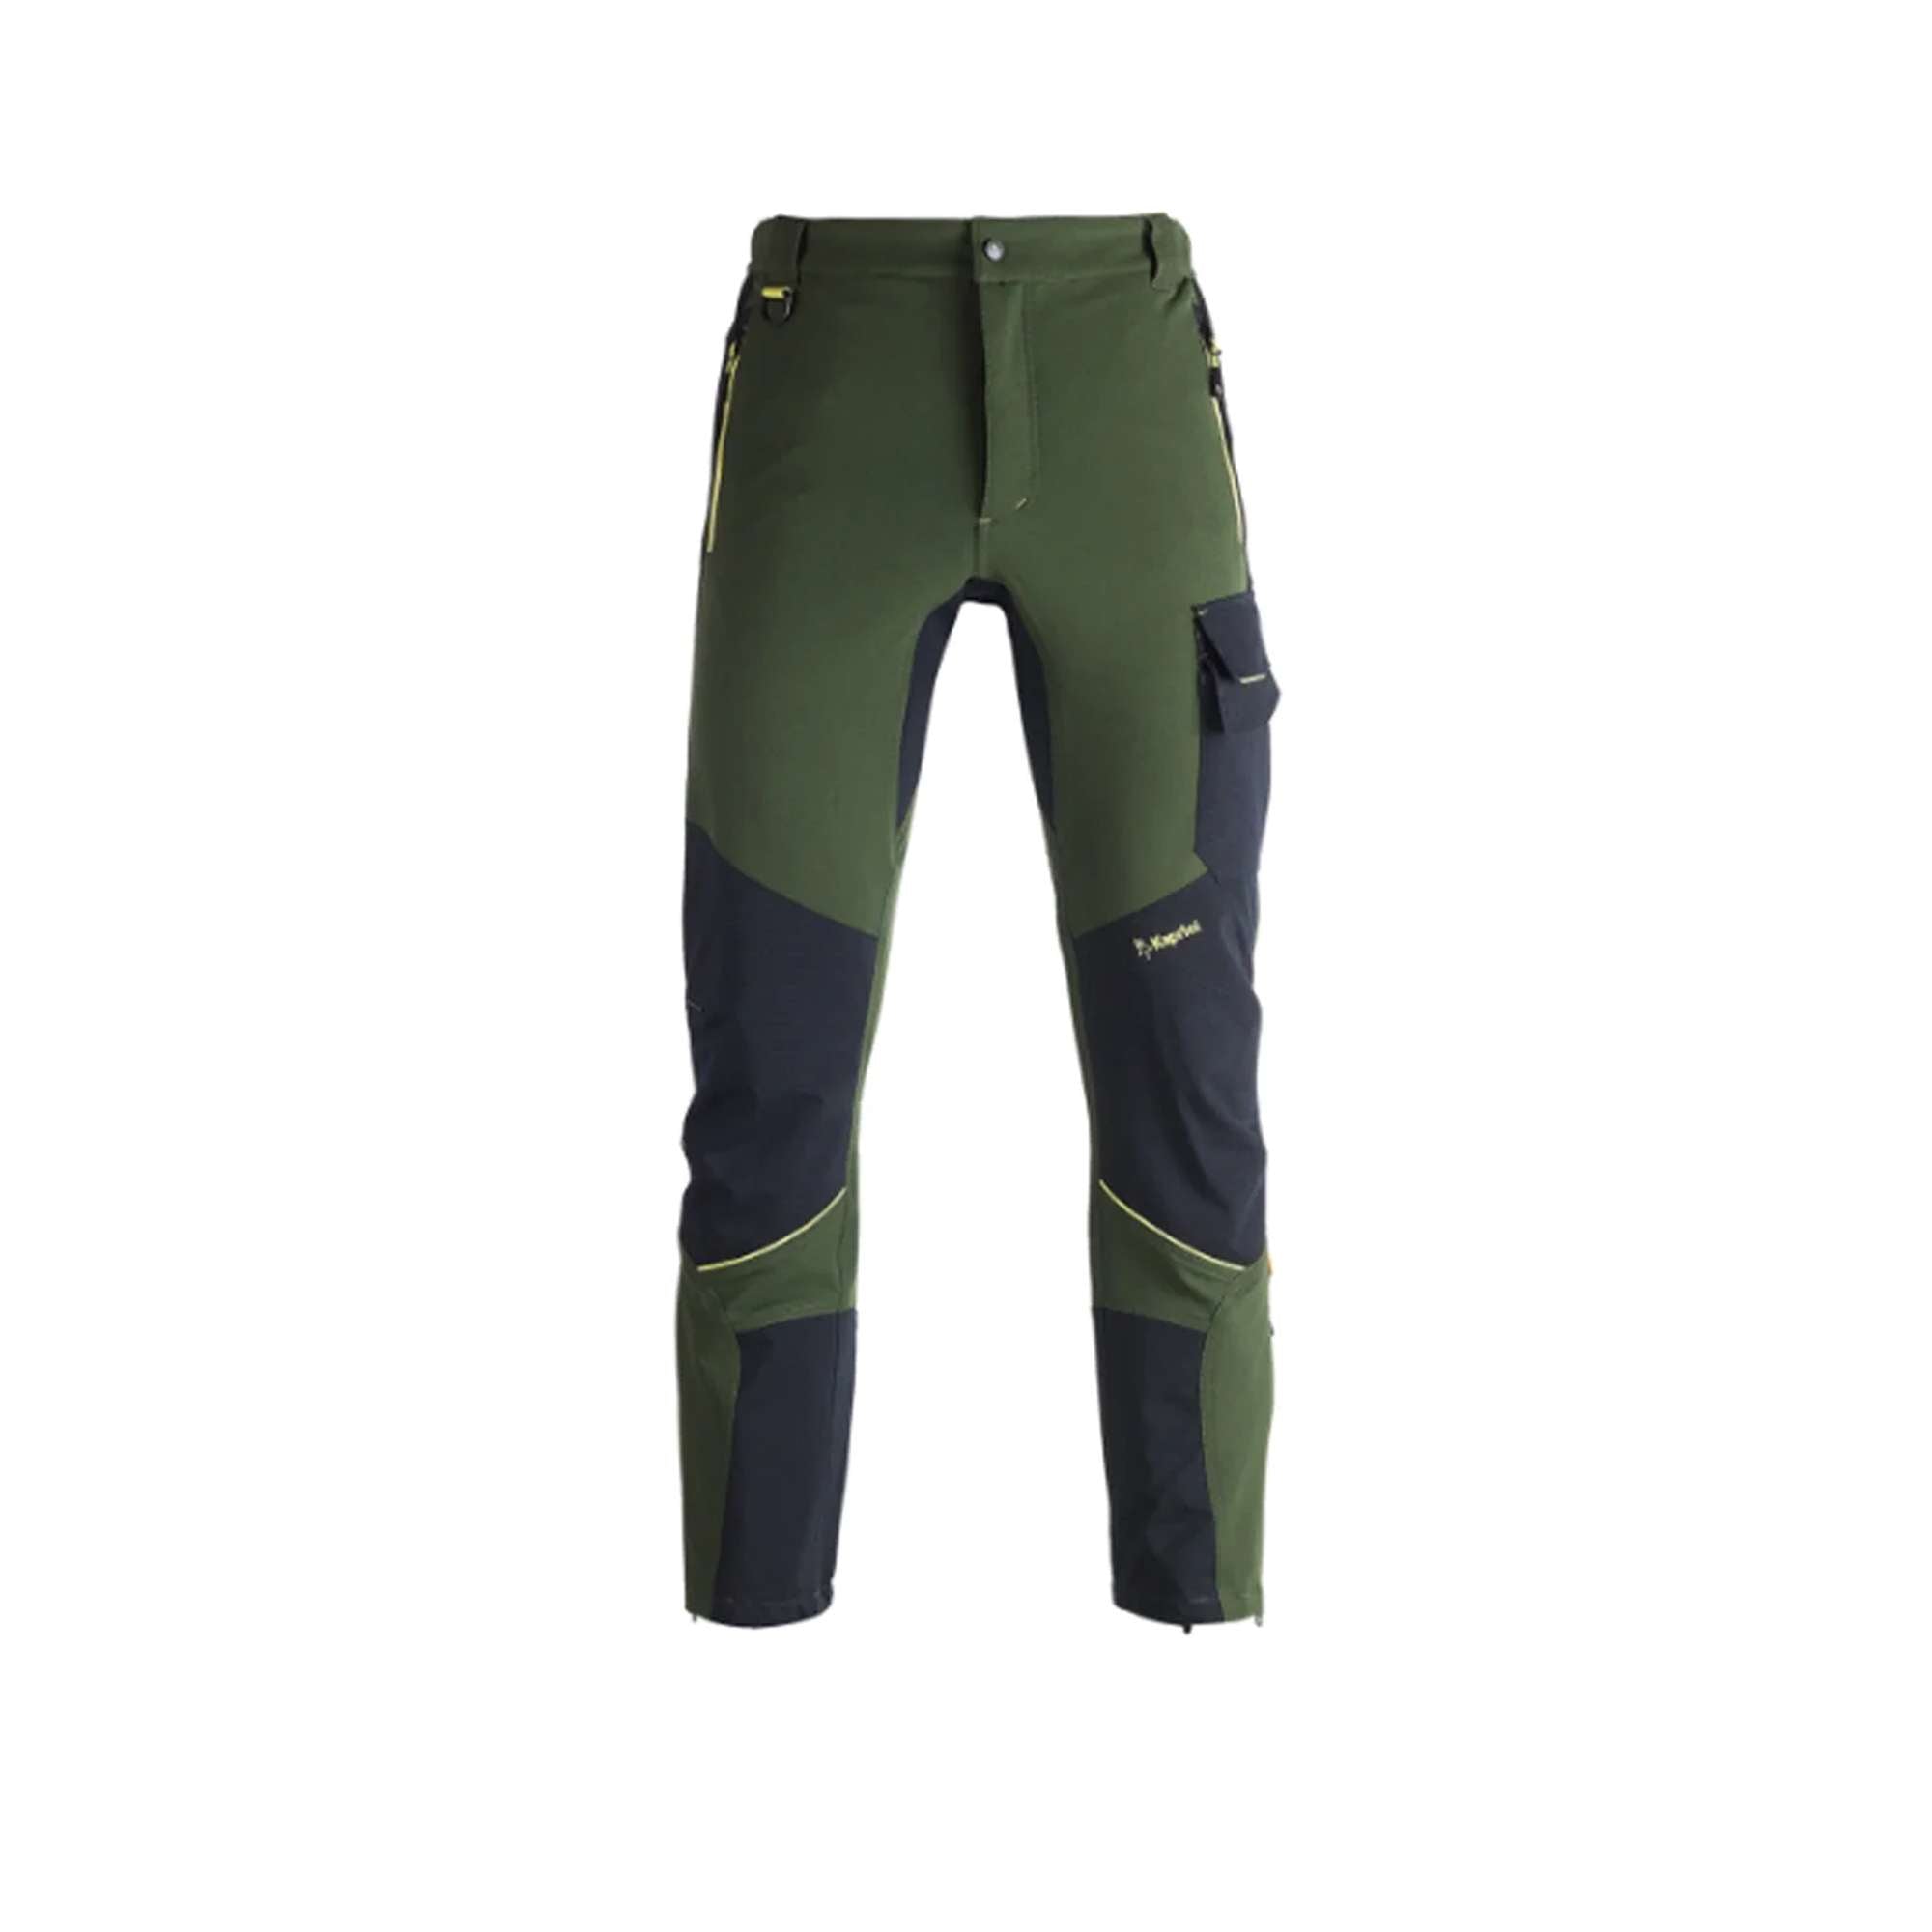 Pantaloni da lavoro, Giardiniere, Verde/ Nero Taglia XL - Kapriol 36563